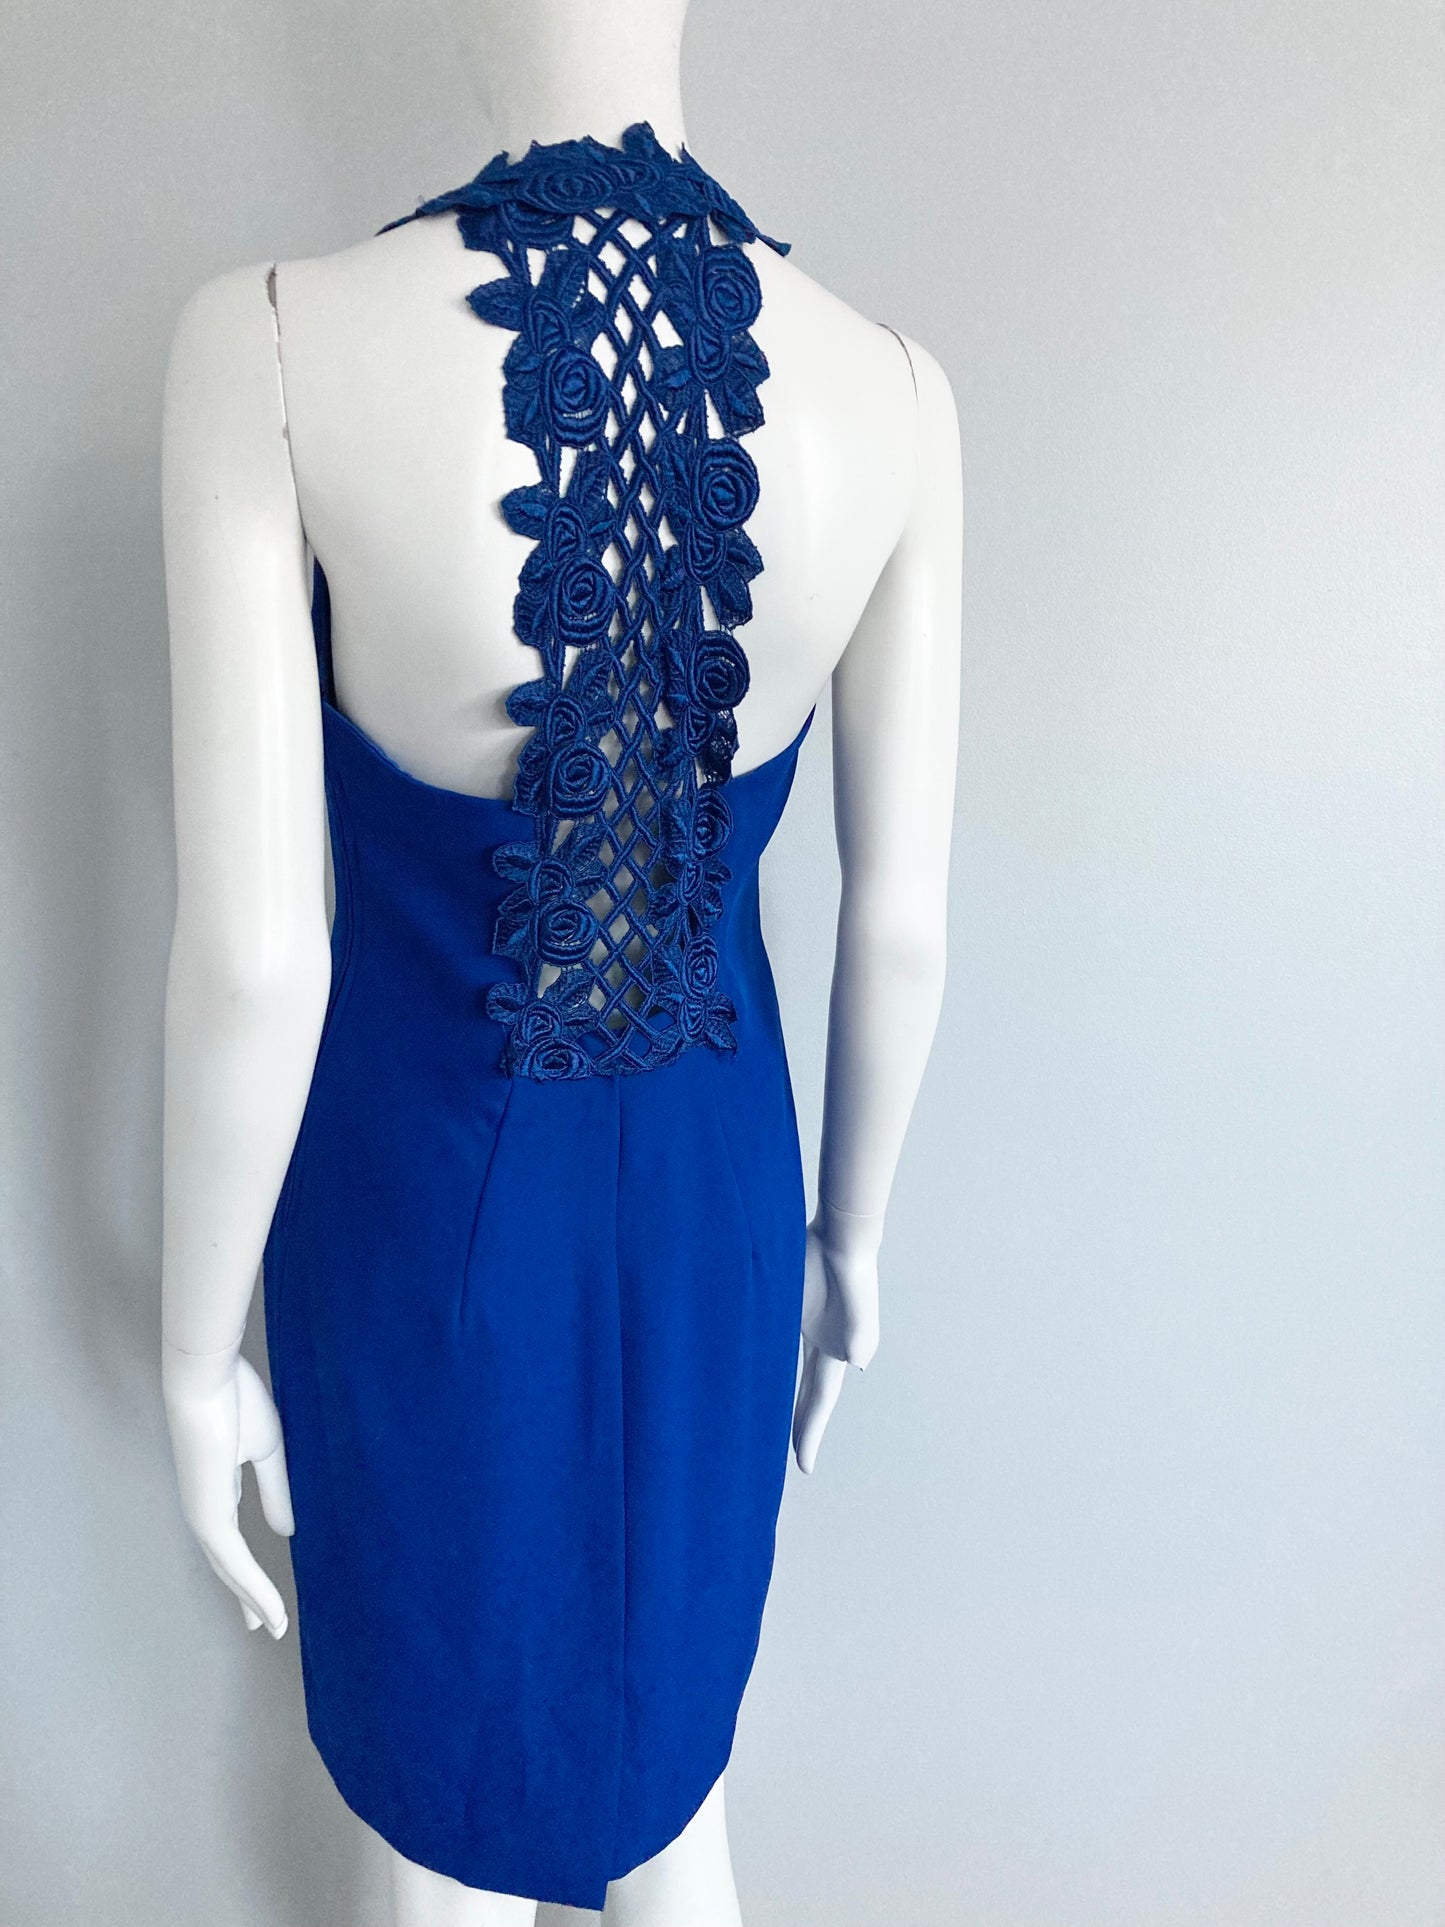 1980s/90s Blue Bombshell Lace Back Dress, Size S